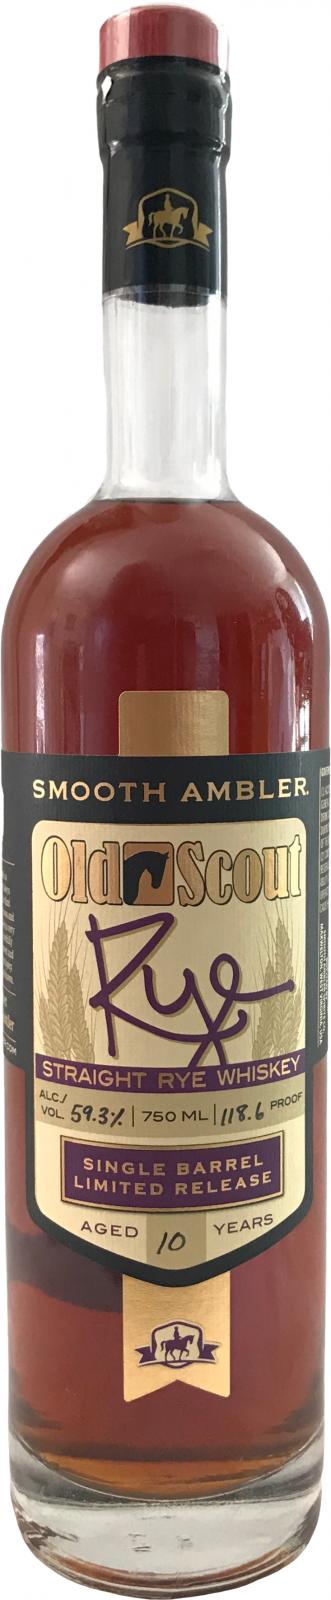 Smooth Ambler 10yo Old Scout Rye Single Barrel New American Charred Oak #3574 59.3% 750ml